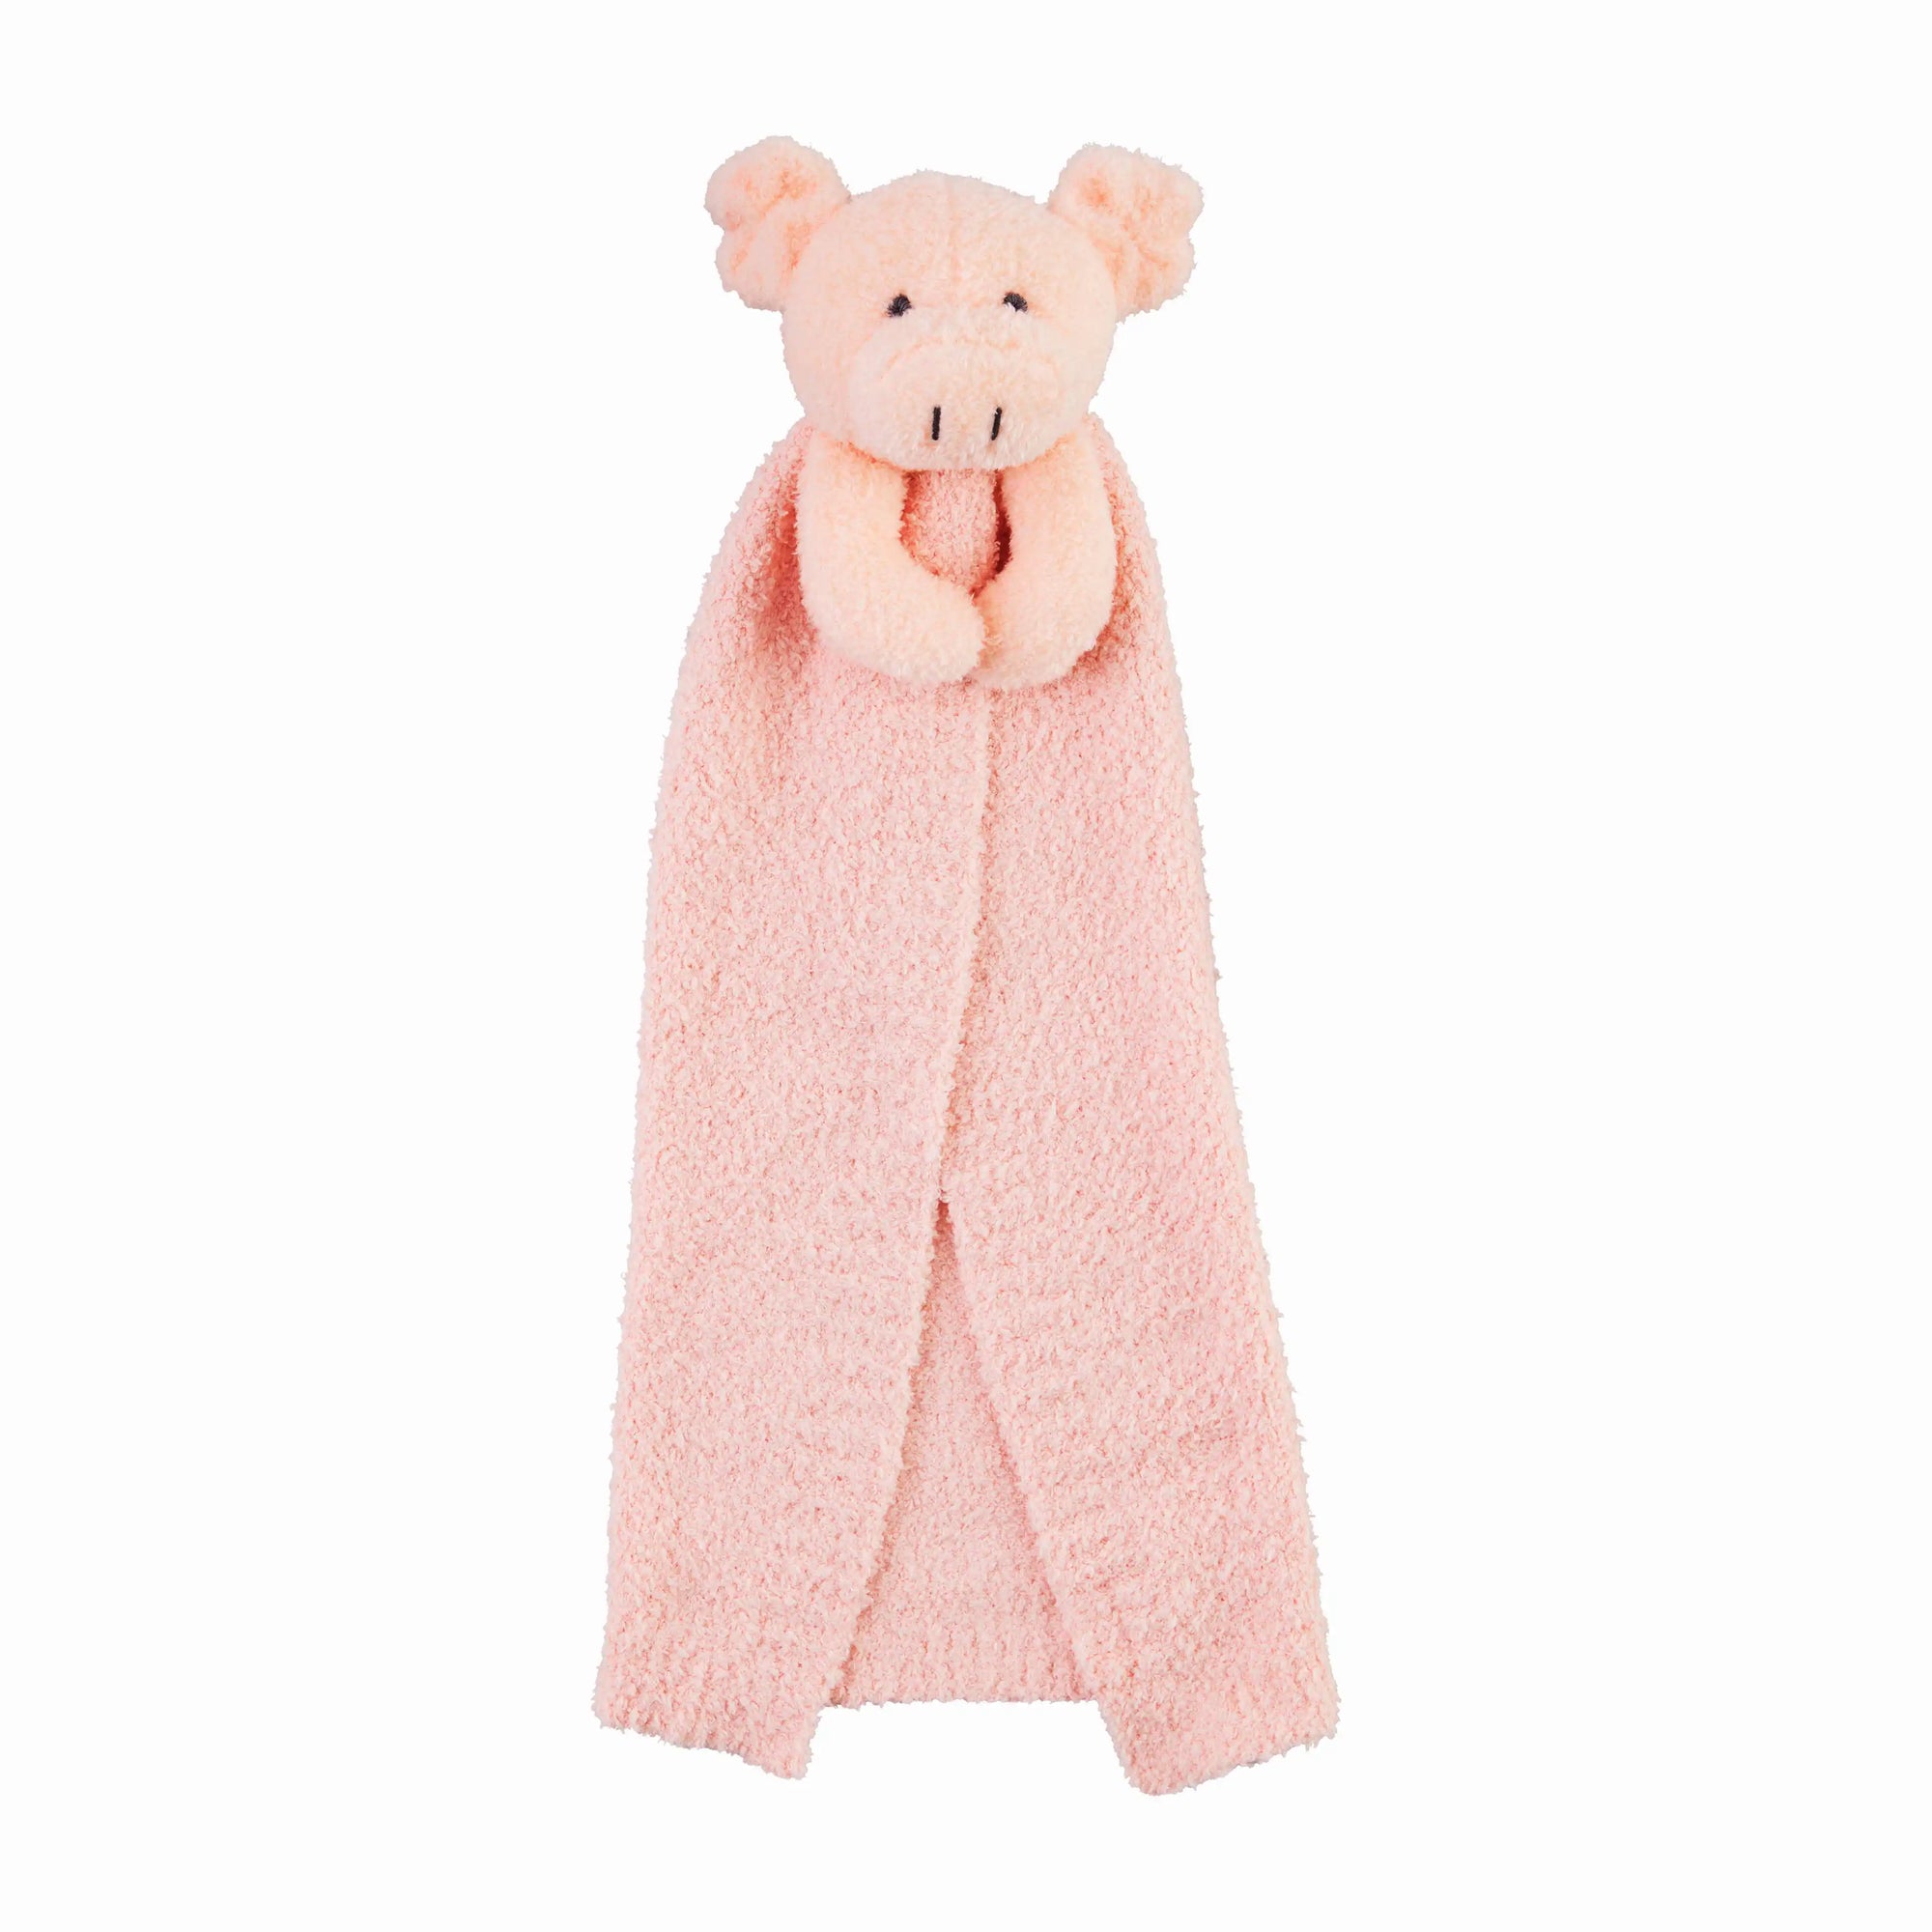 Chenille Pig Lovey Blanket by Mud Pie